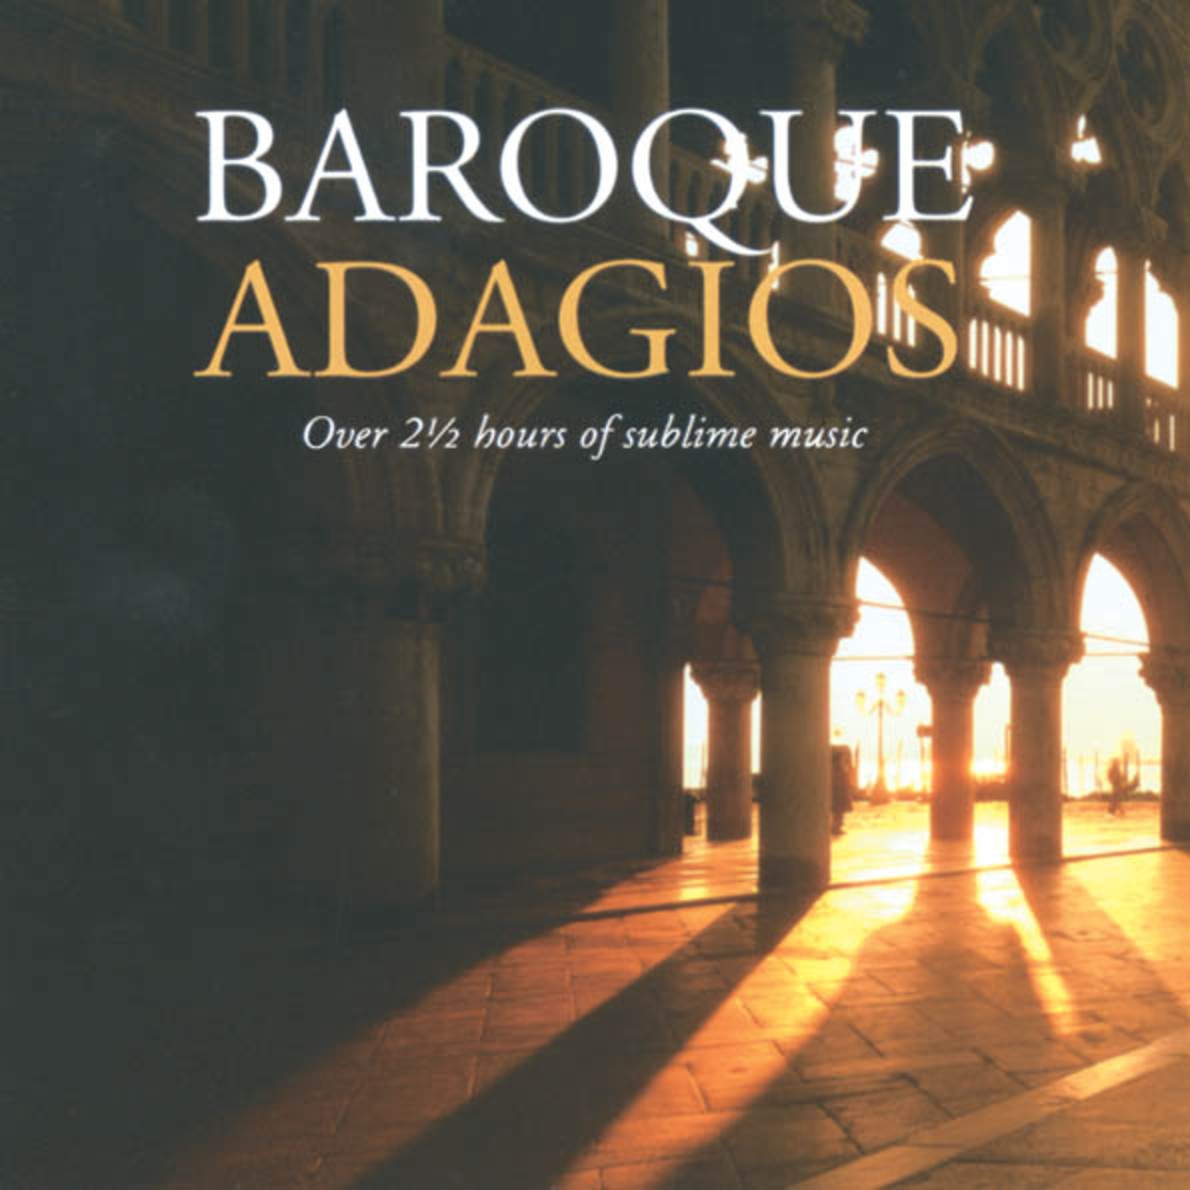 J.S. Bach: Arioso (Adagio in G) from Cantata BWV 156